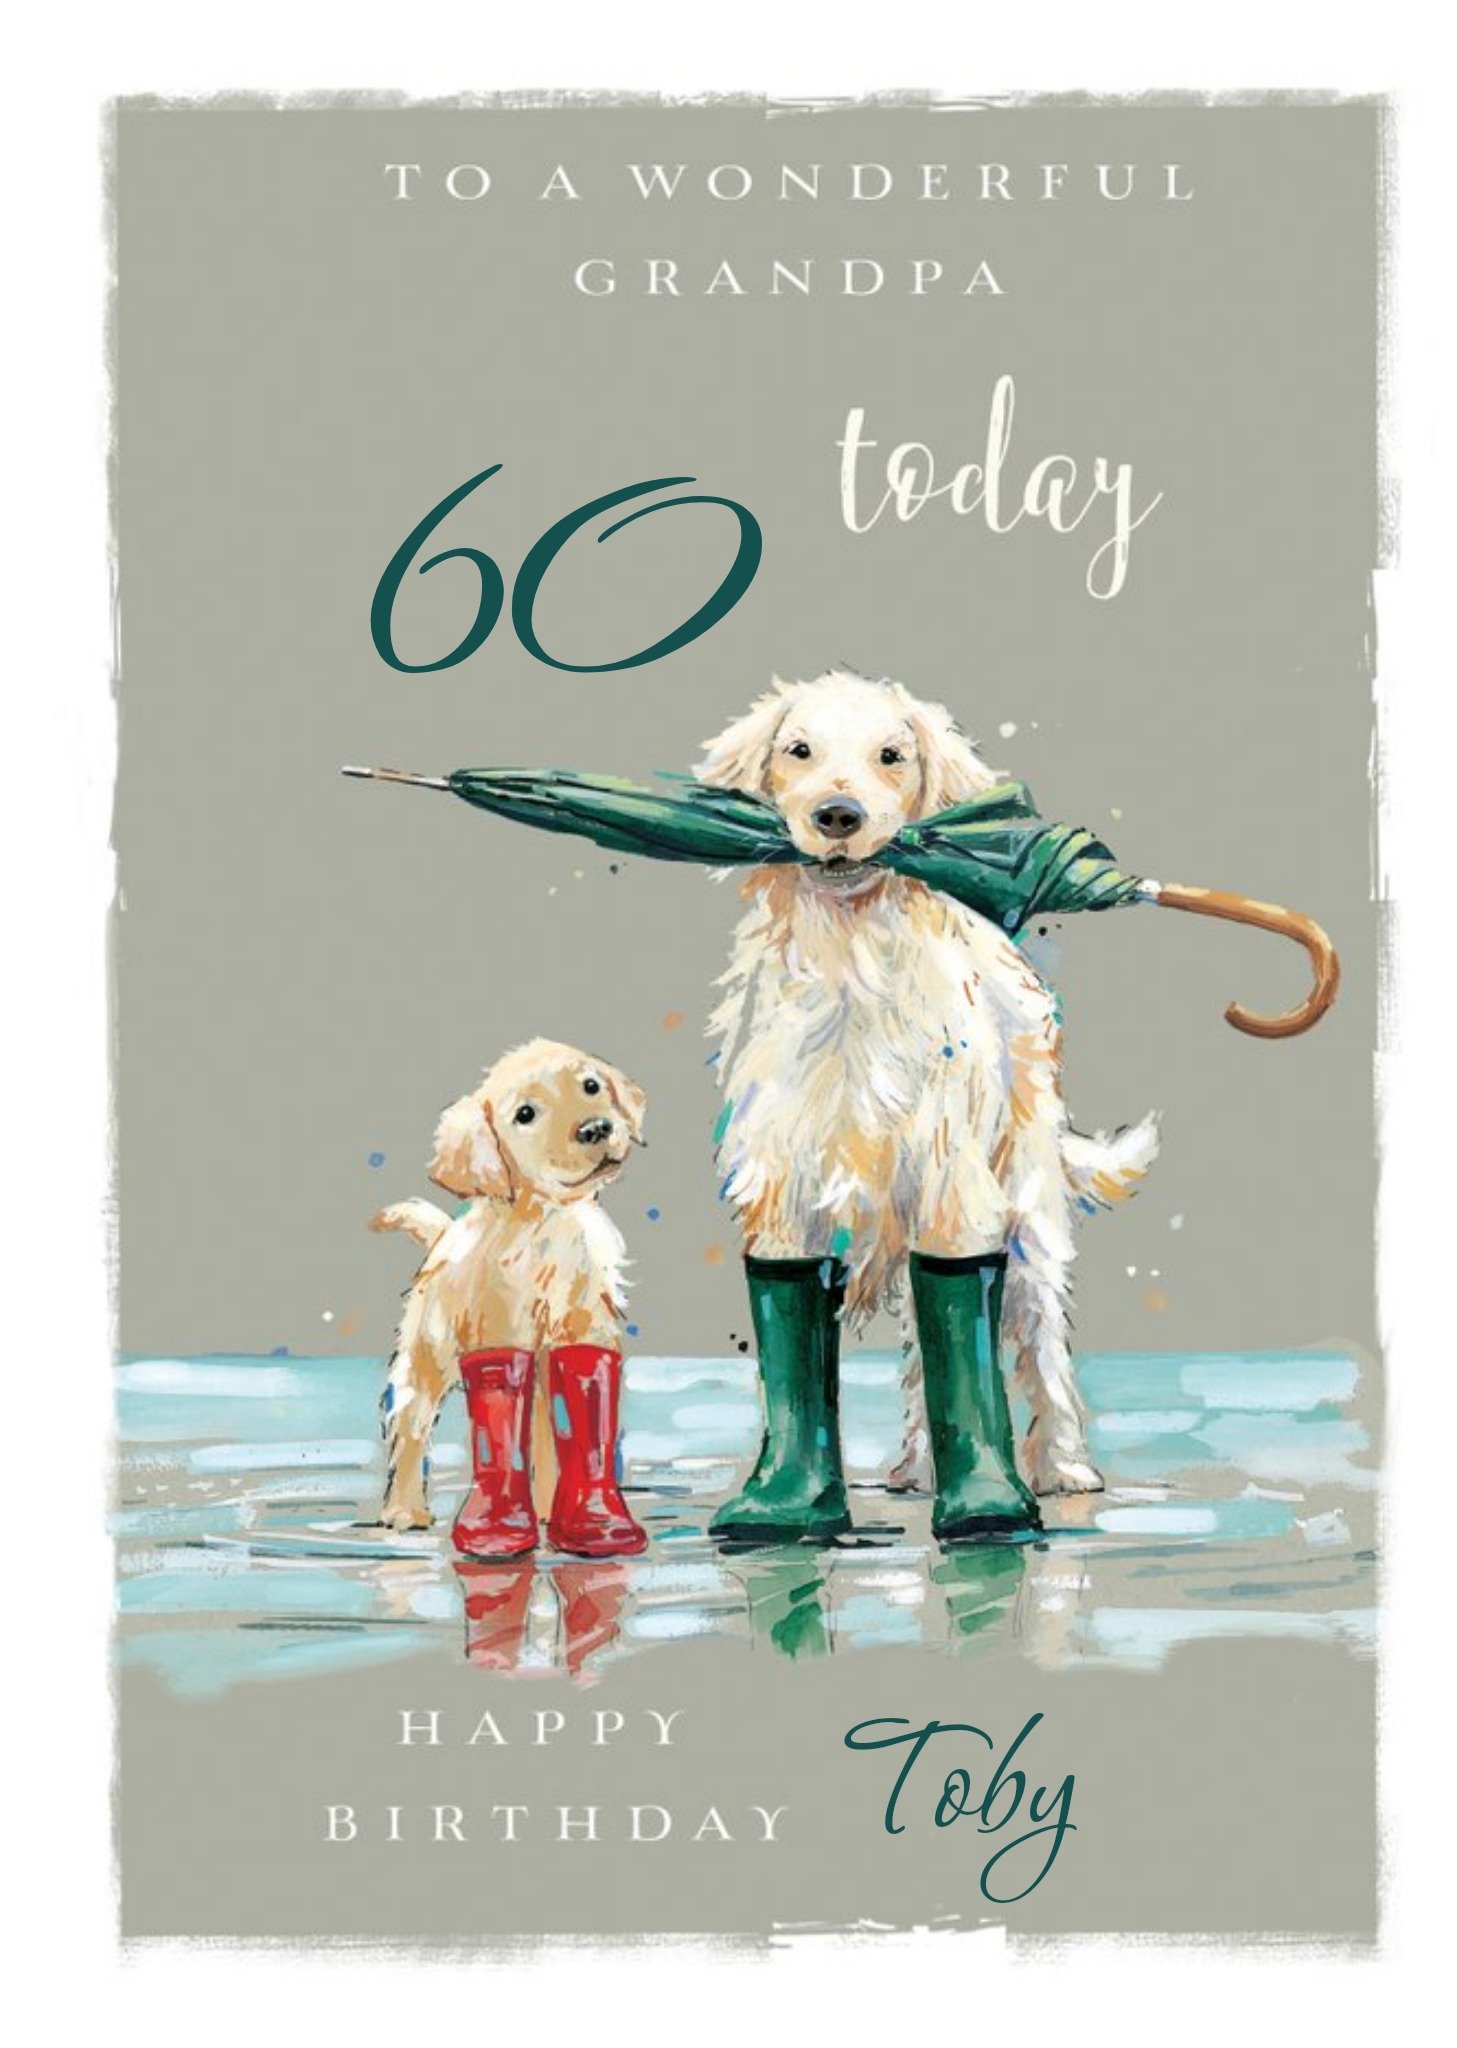 Moonpig Illustration Of A Two Golden Retrievers Wearing Wellies Happy 60th Birthday Grandpa Card Eca